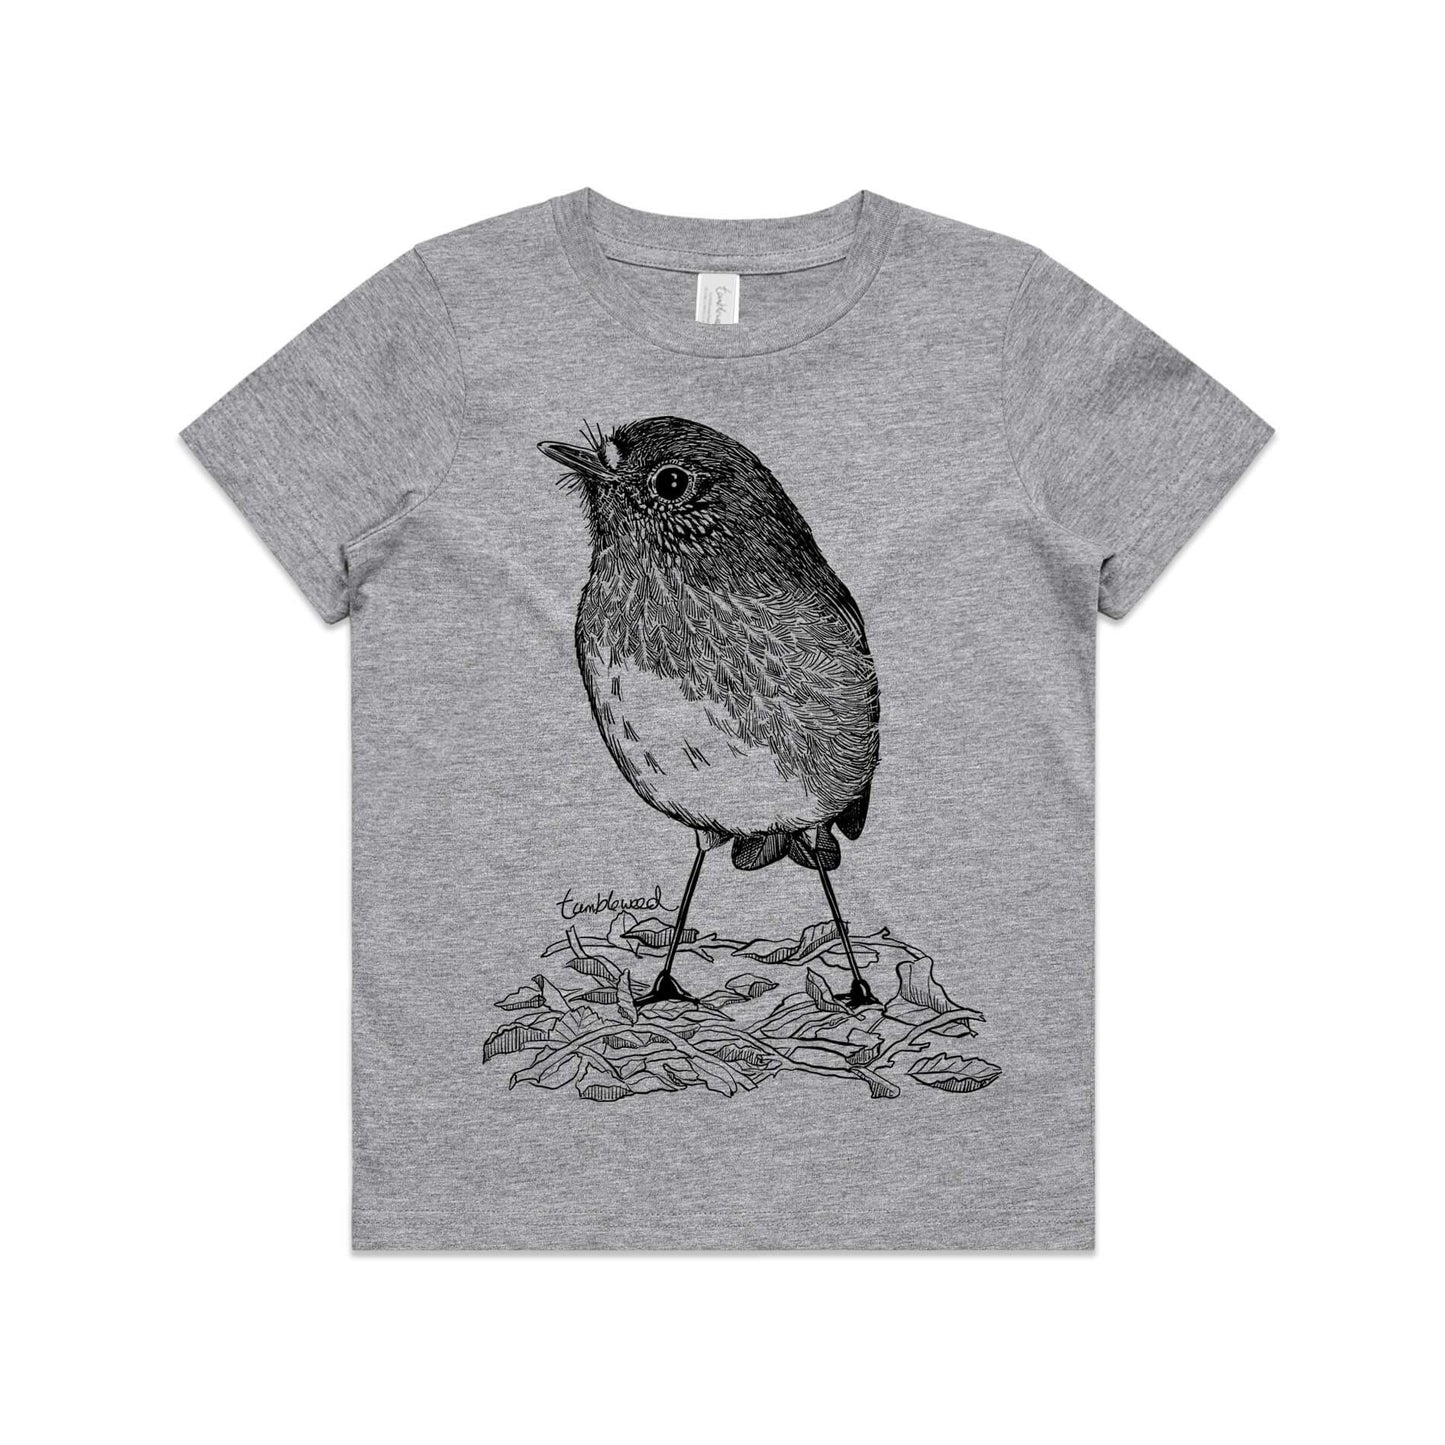 Grey marle, cotton kids' t-shirt with screen printed North Island robin/toutouwai design.